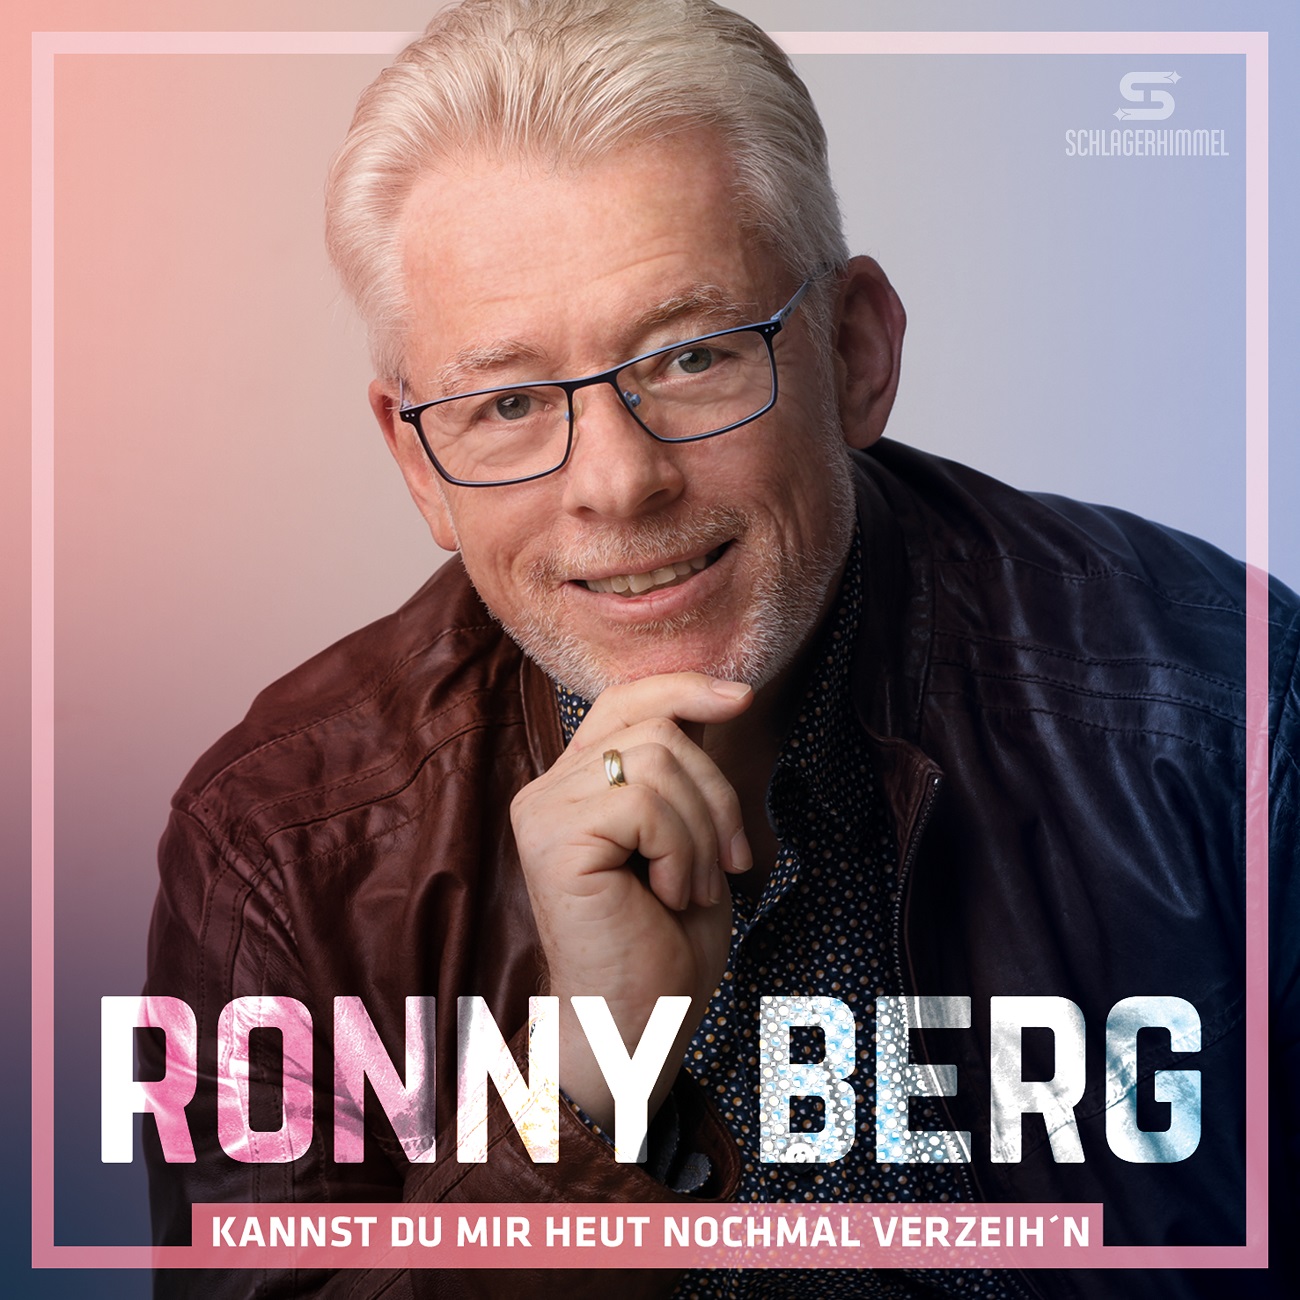 Ronny Berg - Kannst du mir heut nochmal verzeihn Cover 1.jpg